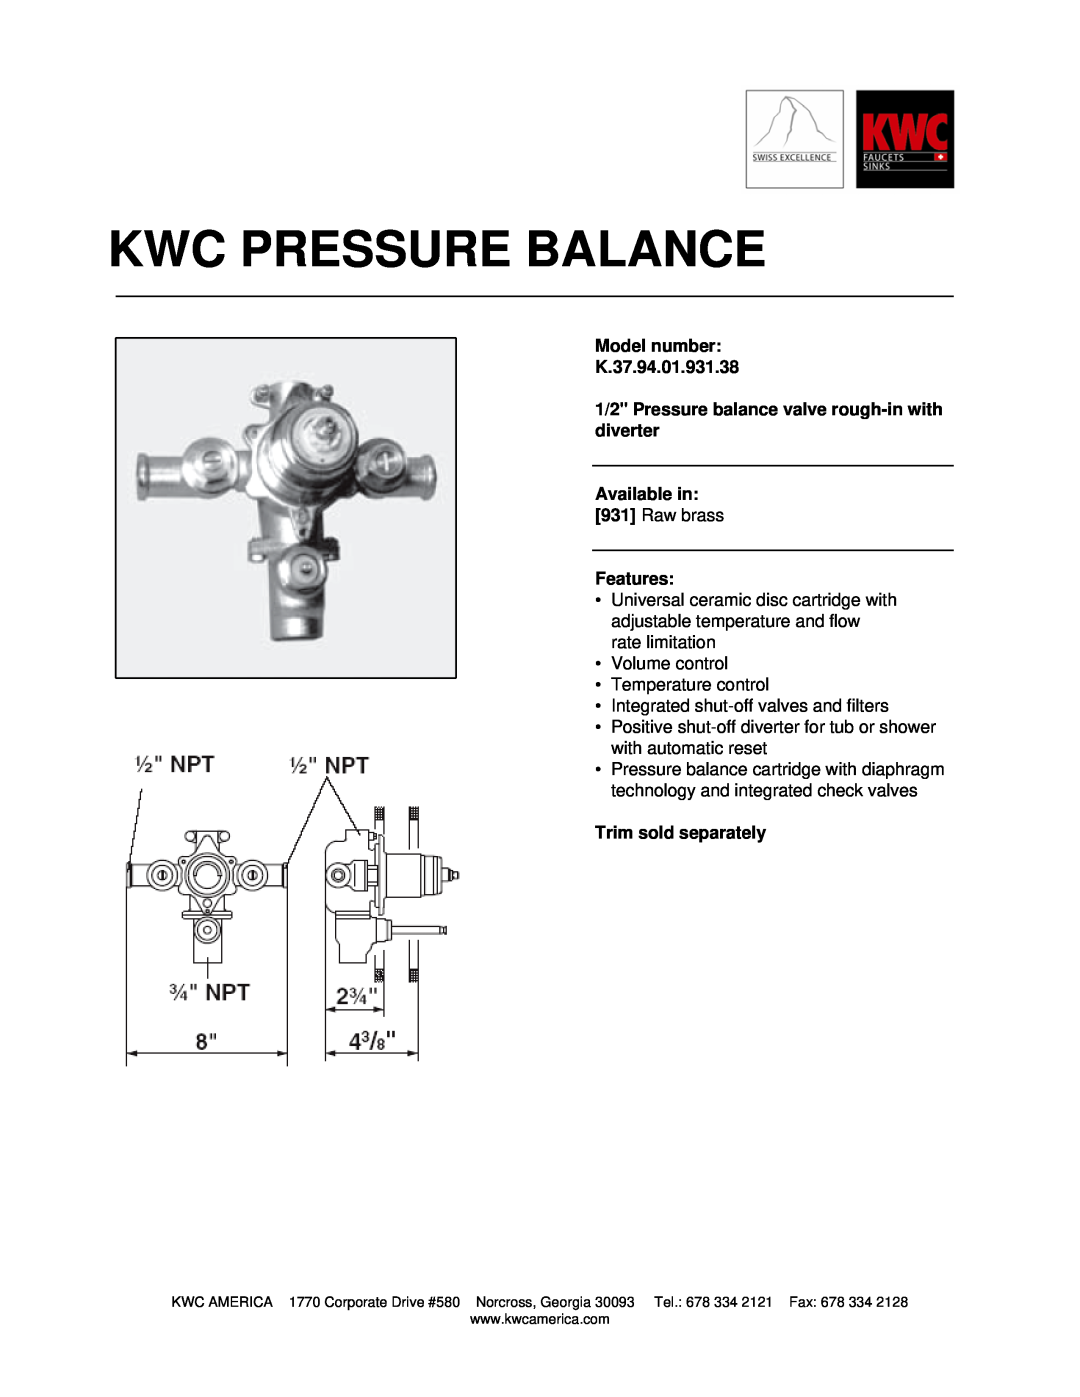 KWC manual Kwc Pressure Balance, Model number K.37.94.01.931.38, 1/2 Pressure balance valve rough-inwith diverter 